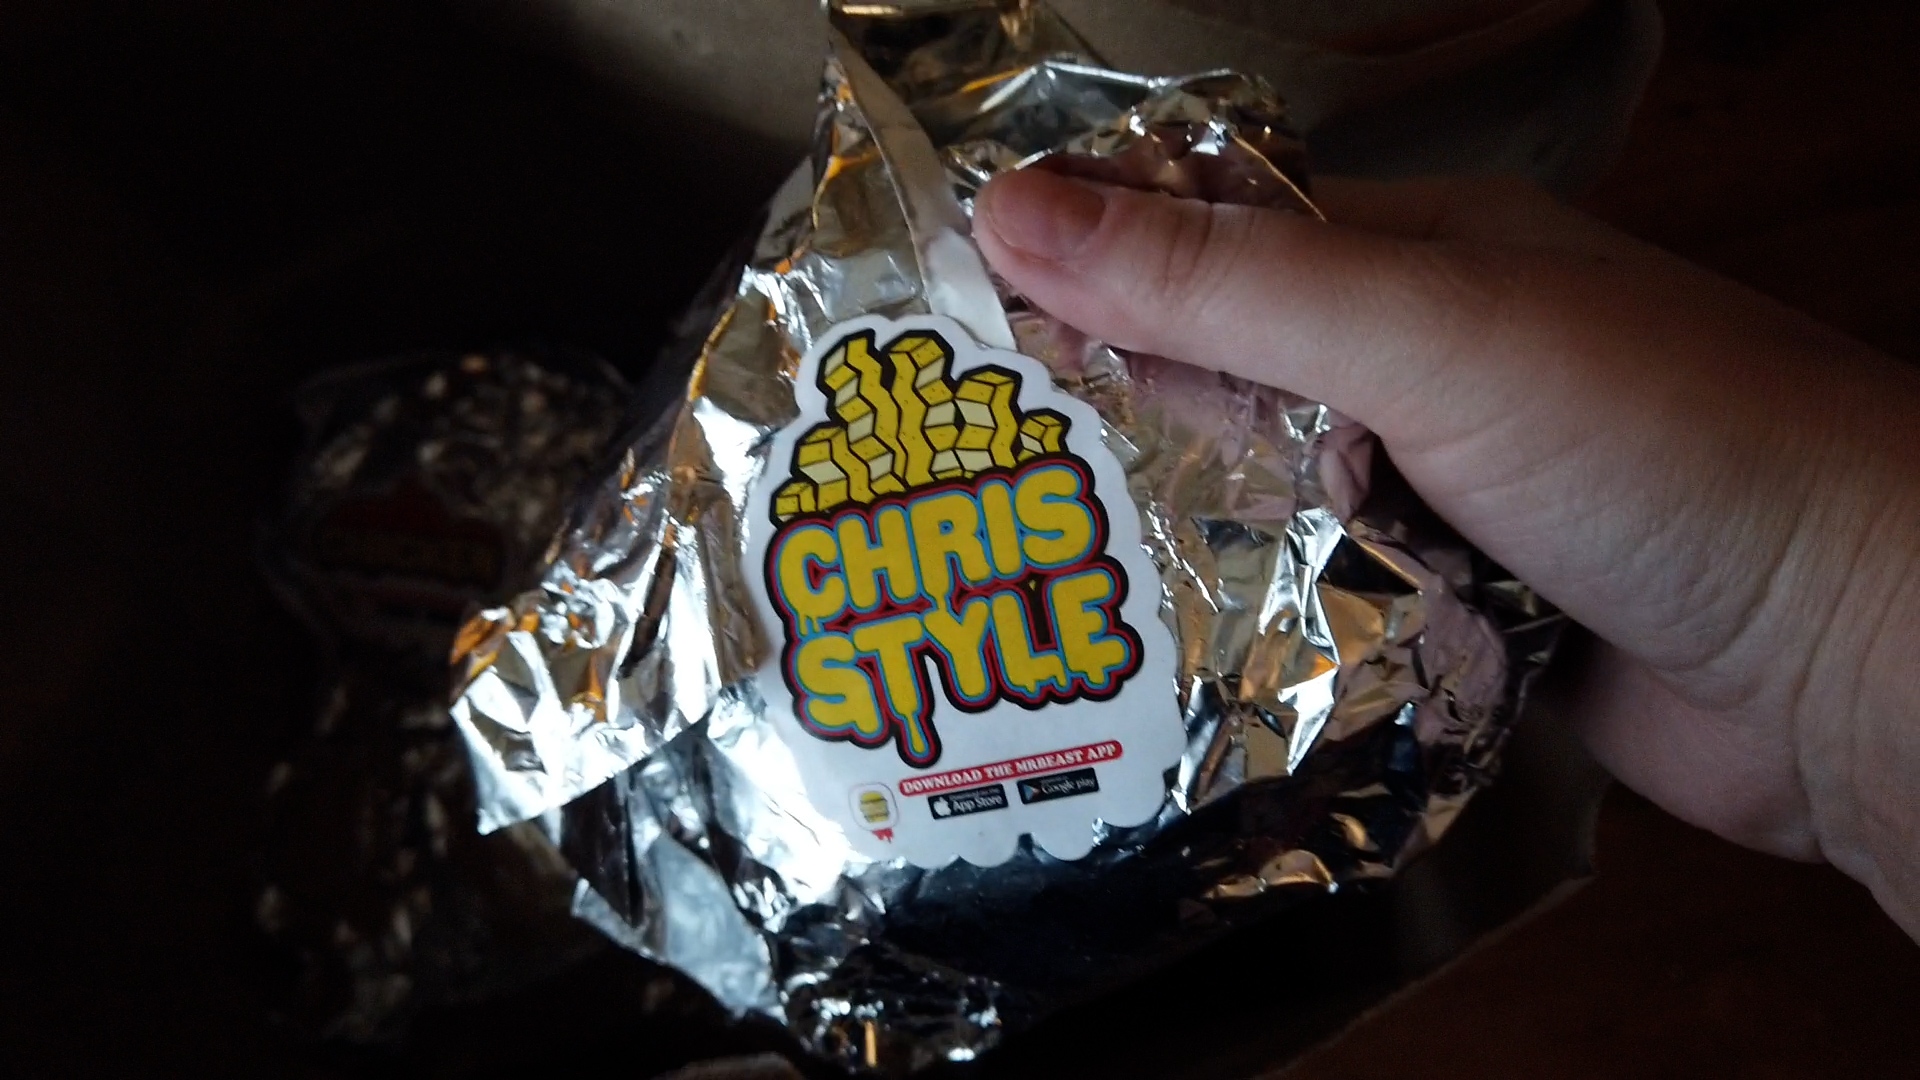 chris style burger